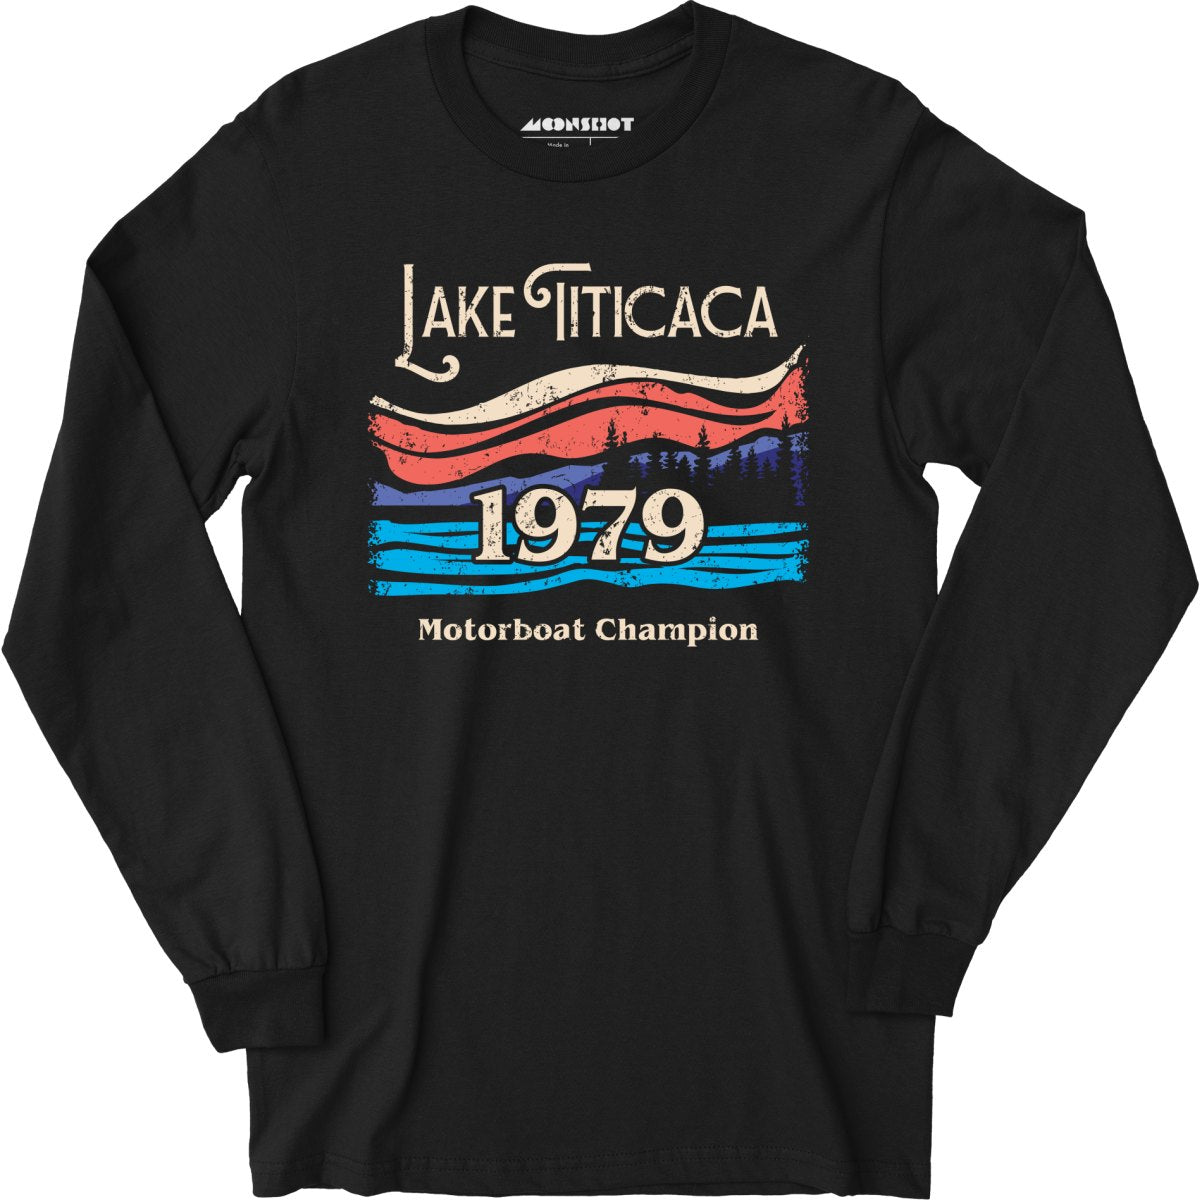 Lake Titicaca Motorboat Champion - Long Sleeve T-Shirt